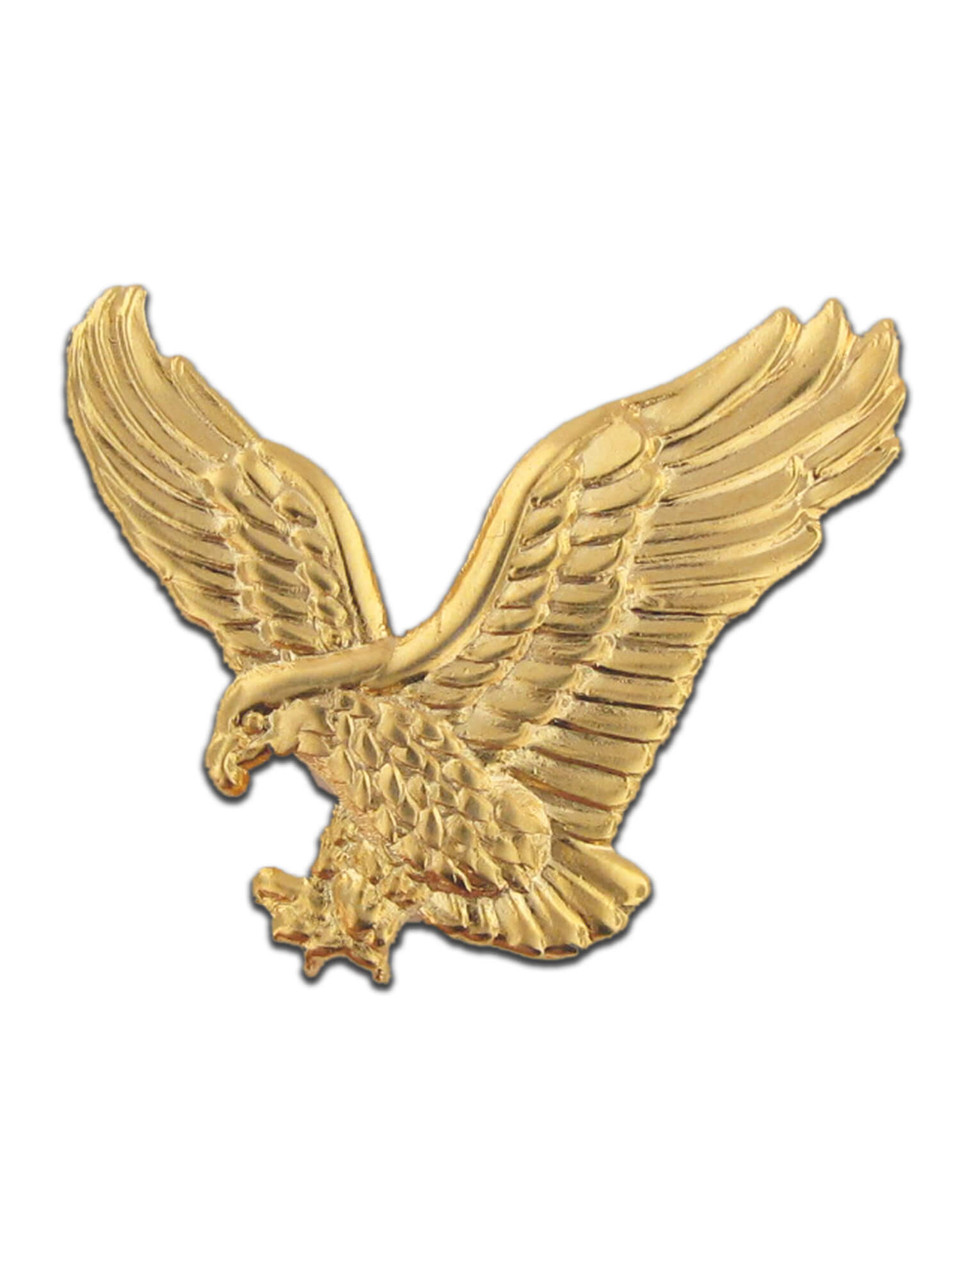 Eagle Pin - Gold | PinMart